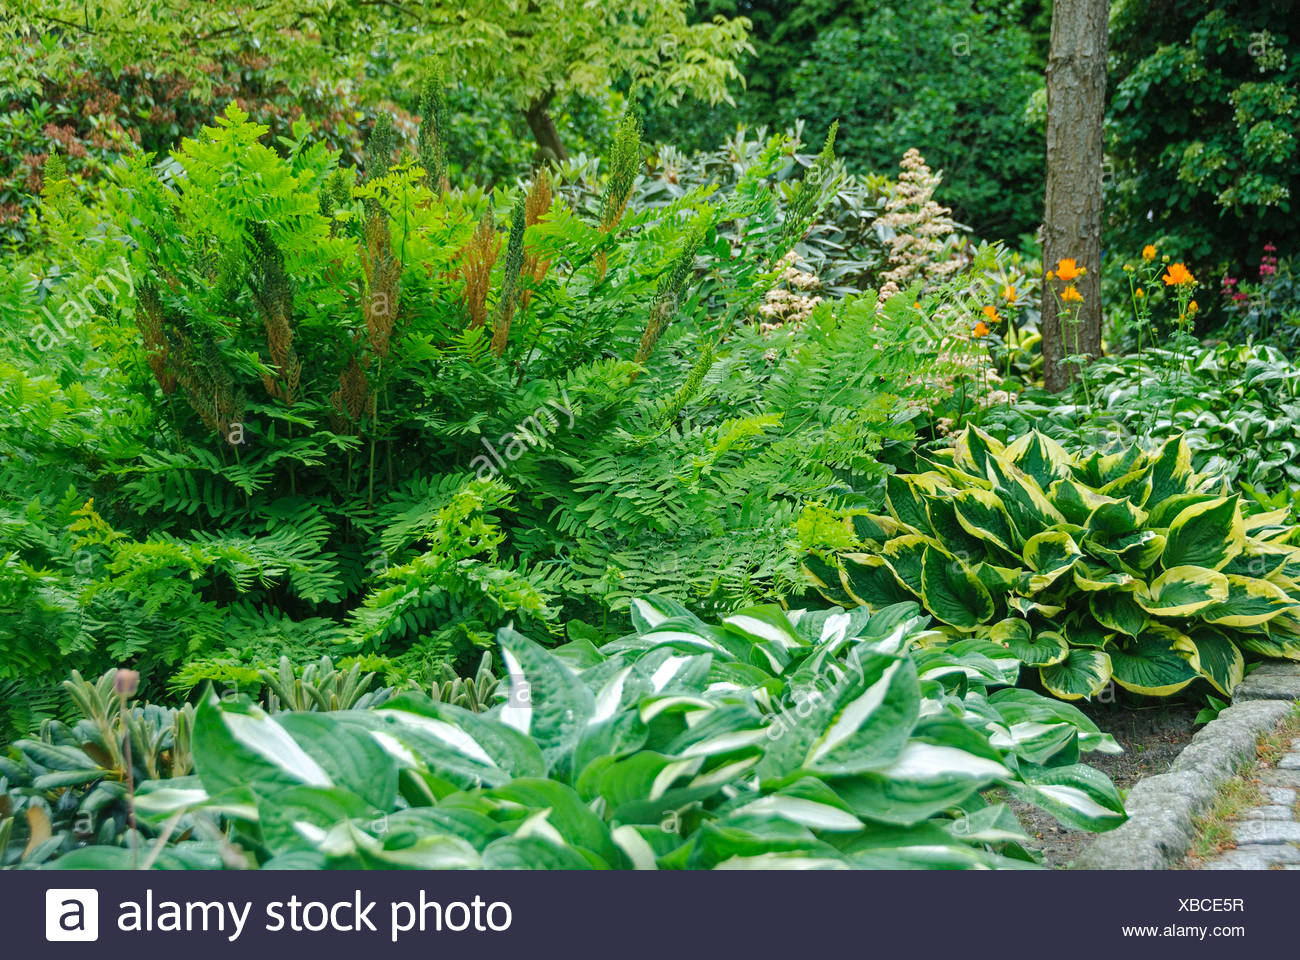 Royal Fern Osmunda Regalis In A Garden With Hosta Stock Photo Alamy